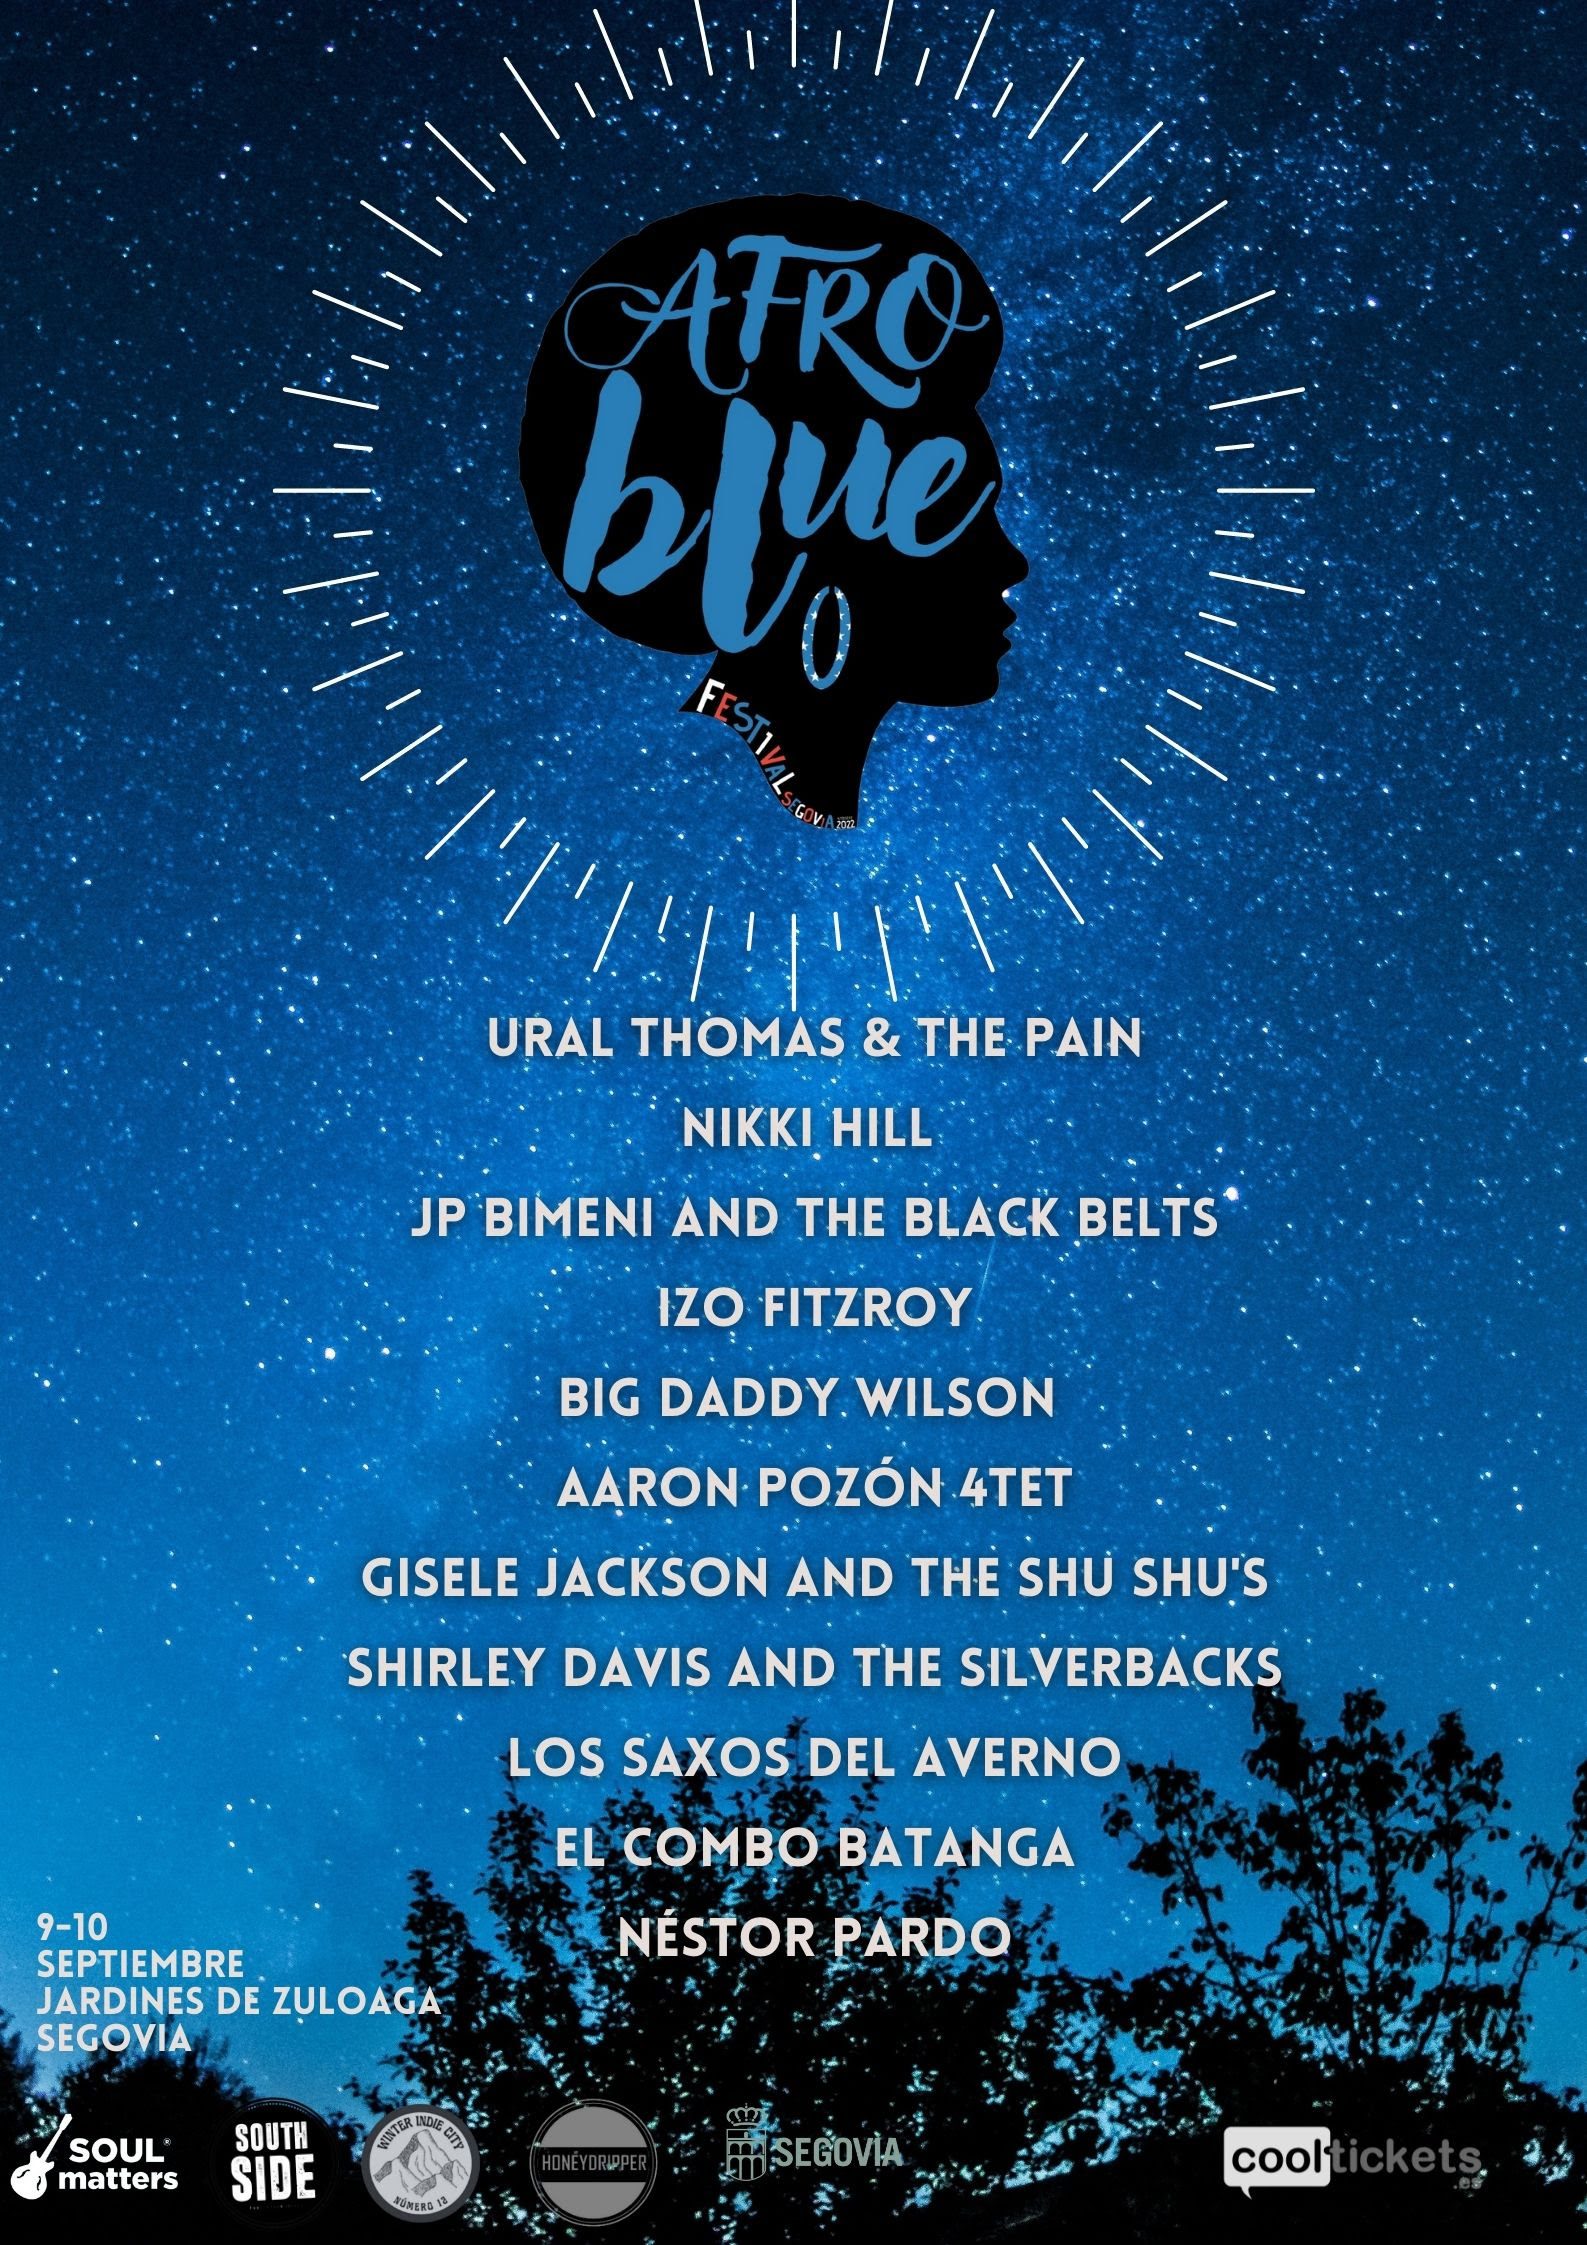 El festival internacional de música Afro Blue llega a Segovia el 9 y 10 de septiembre.